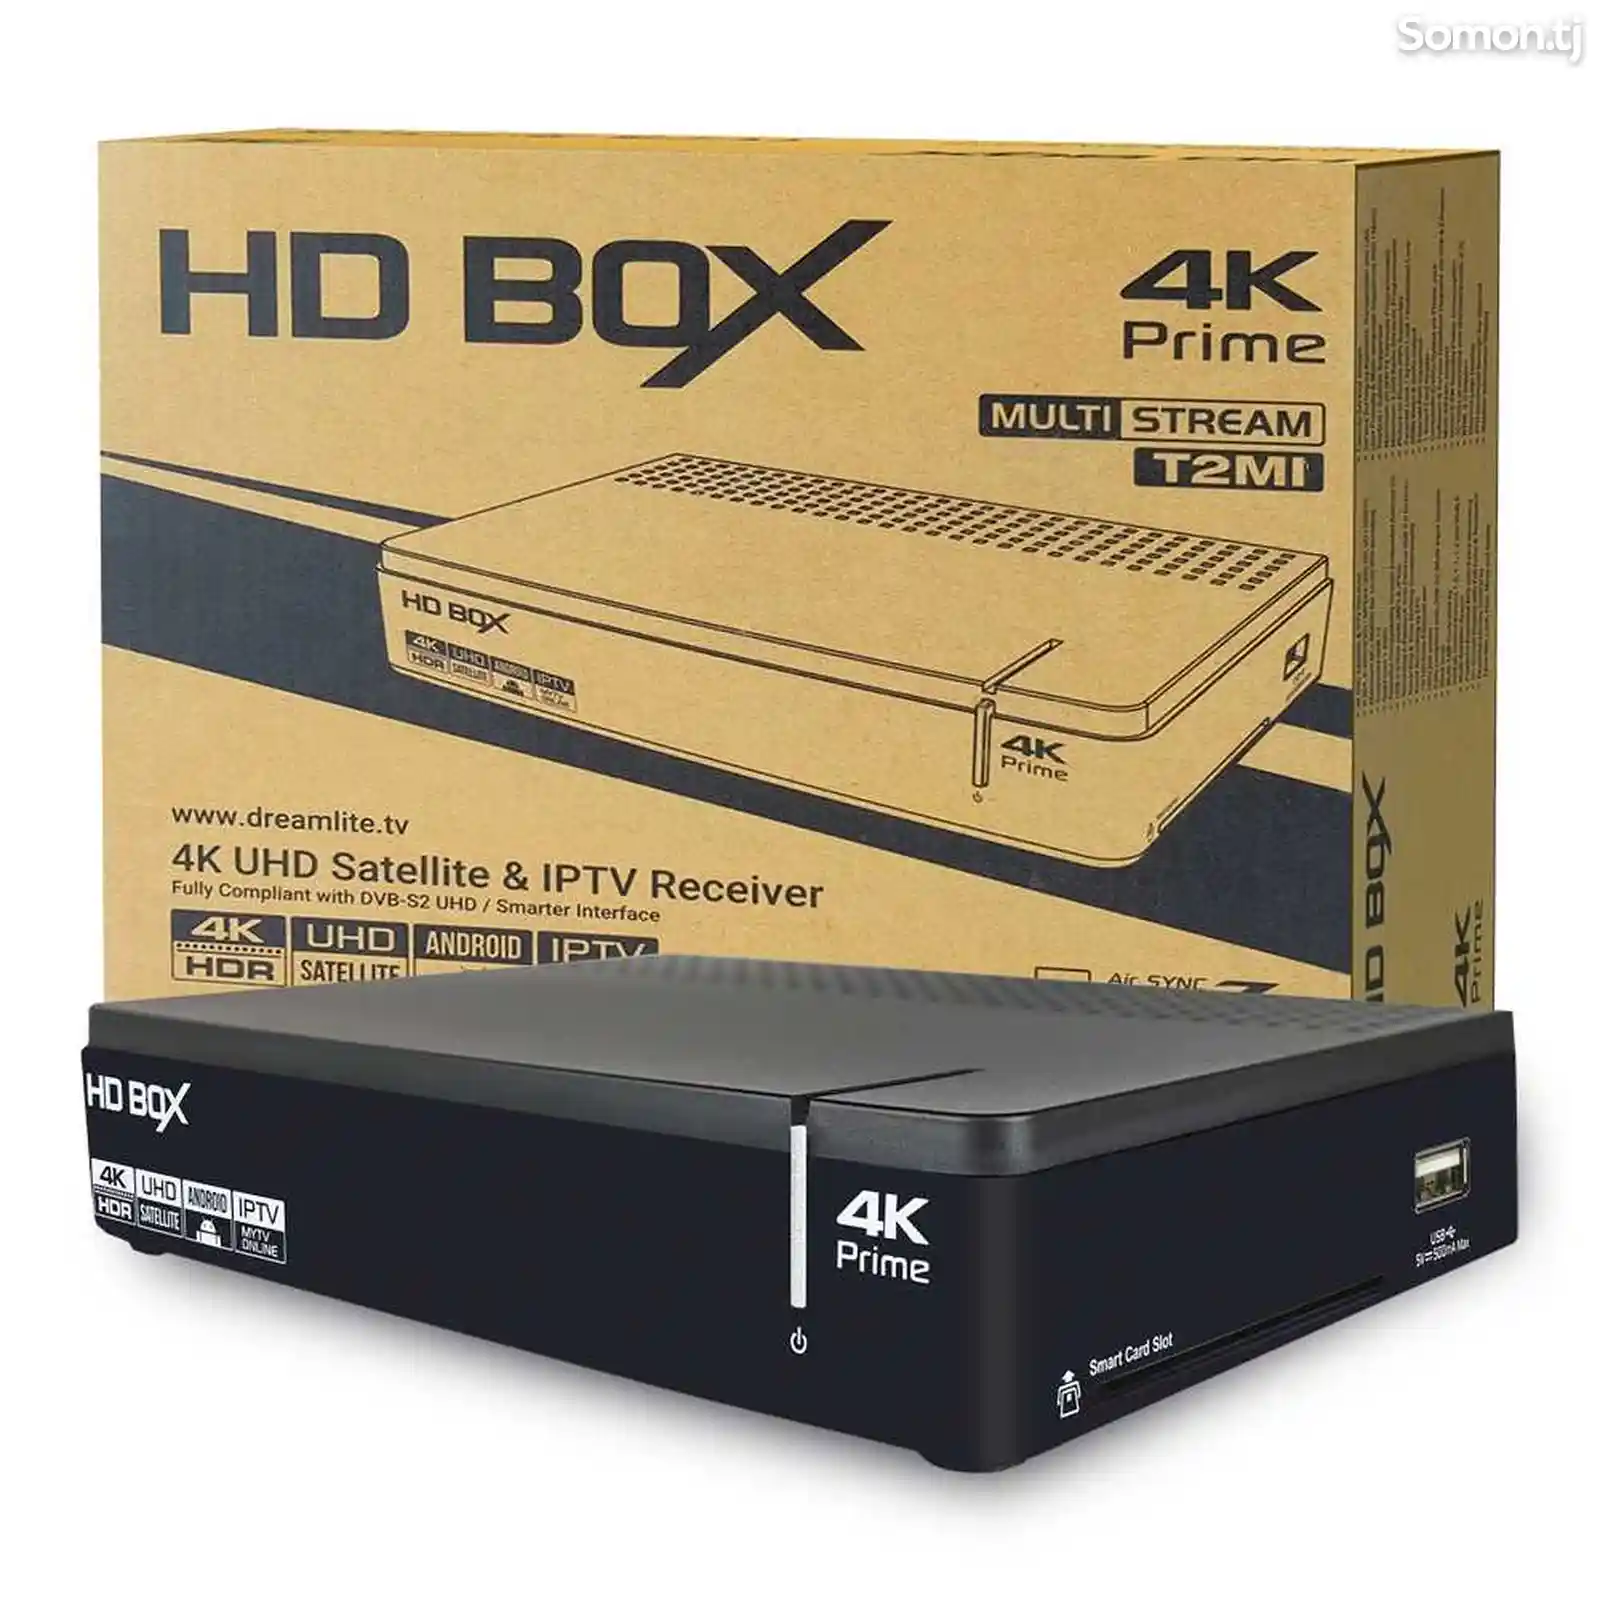 Спутниковый ресивер HD BOX 4K Prime-1